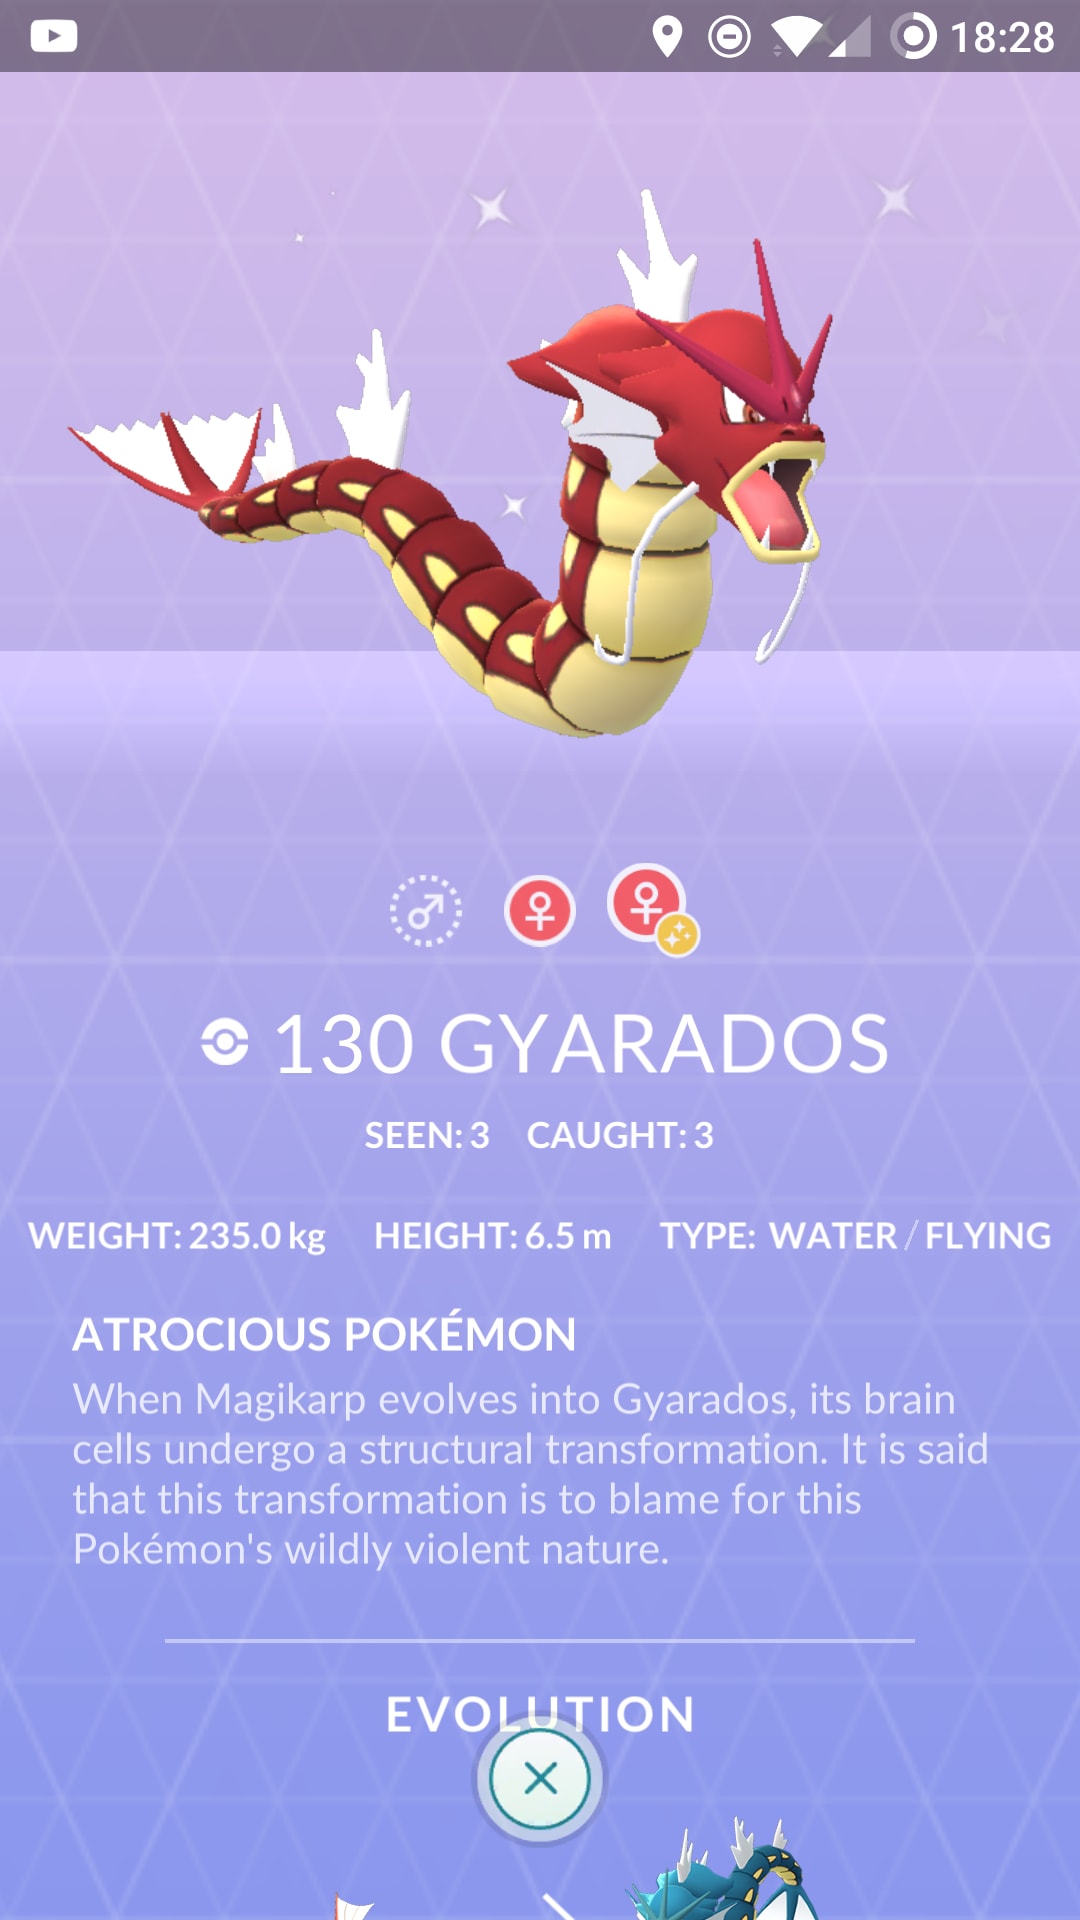 Pokémon Go Shinies - how to catch Shiny Magikarp, Red Gyarados